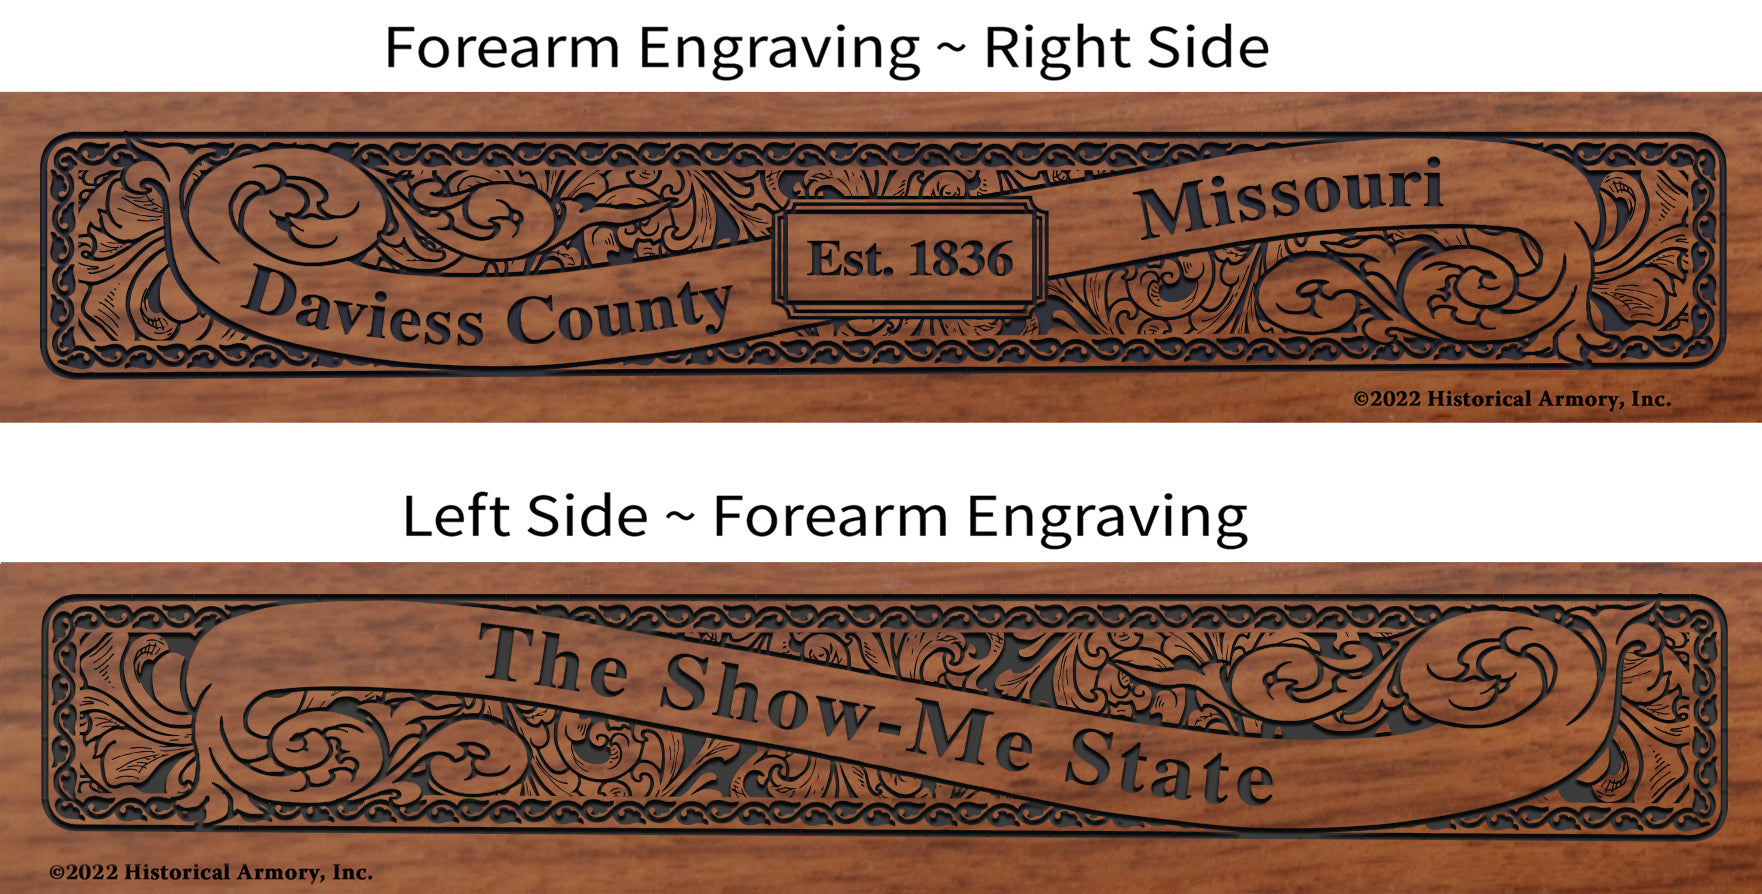 Daviess County Missouri Engraved Rifle Forearm